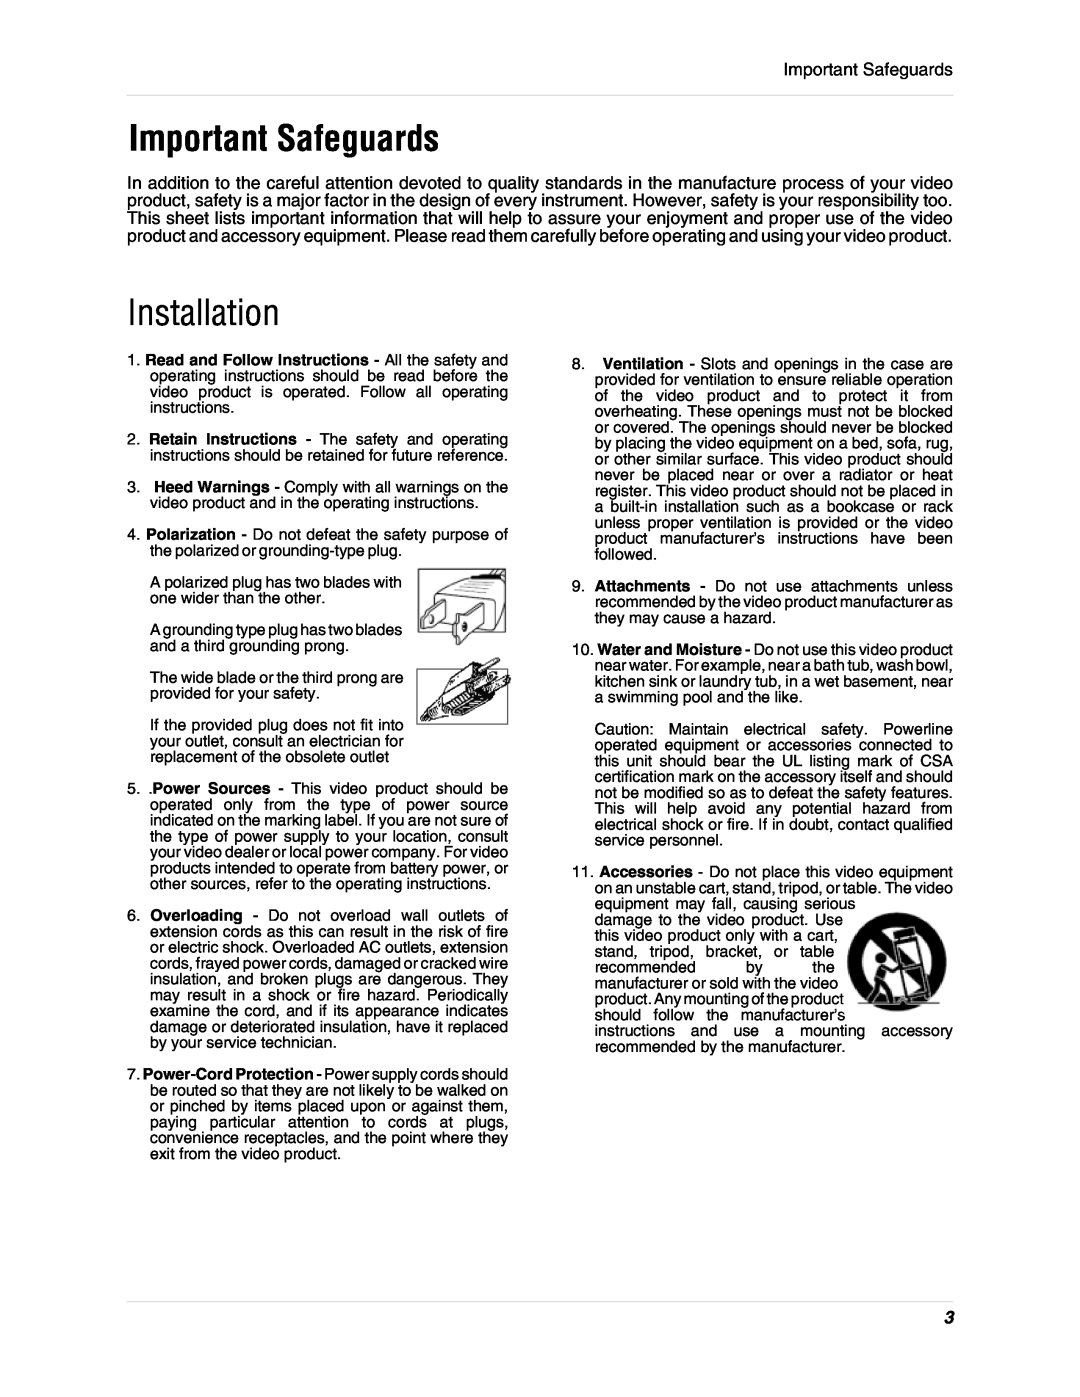 LOREX Technology L15D400 instruction manual Important Safeguards, Installation 